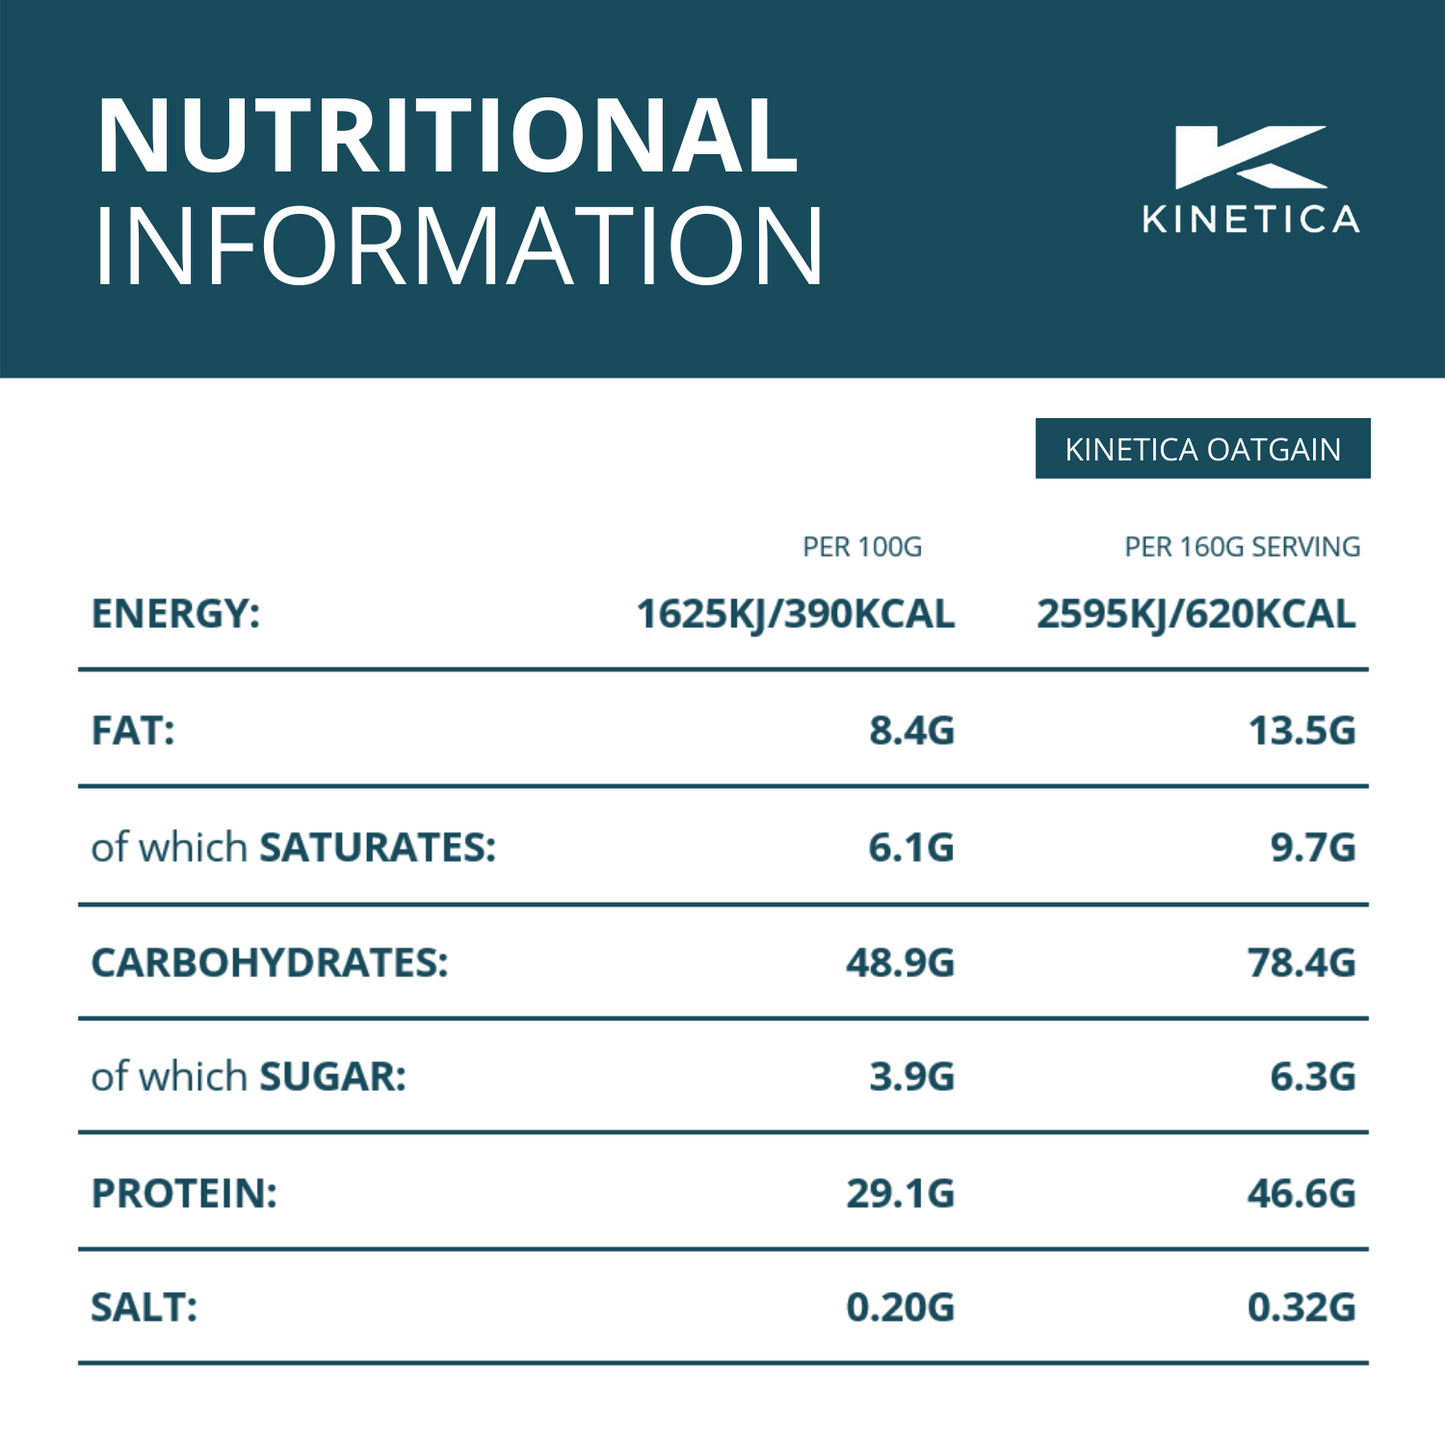 Kinetica Oatgain, mass gainer,protein powder, high calorie shake